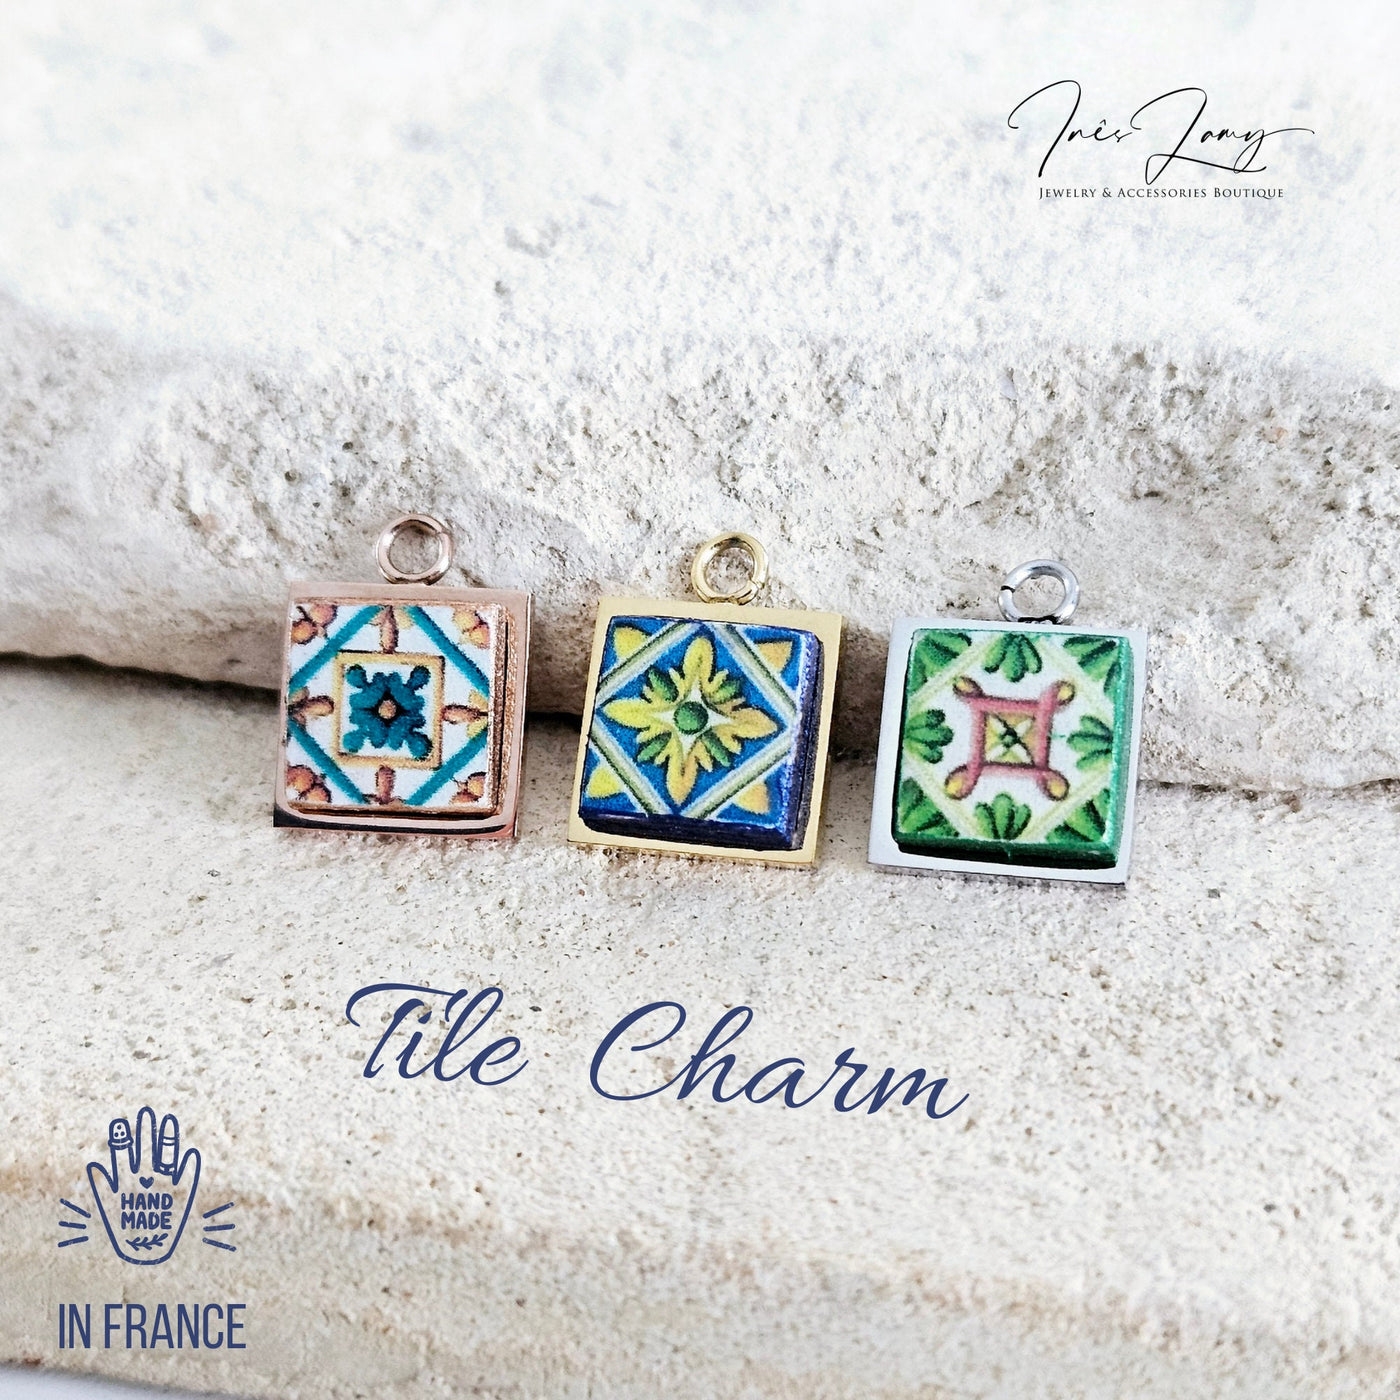 1PC Majolica Tile 12mm Charm Azulejo Square Stainless Steel DIY Handmade Tile Jewelry Making Craft Supply Pendant Earring Bracelet Charm